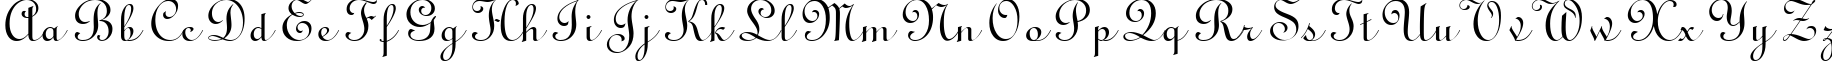 Пример написания английского алфавита шрифтом Typo Upright BT